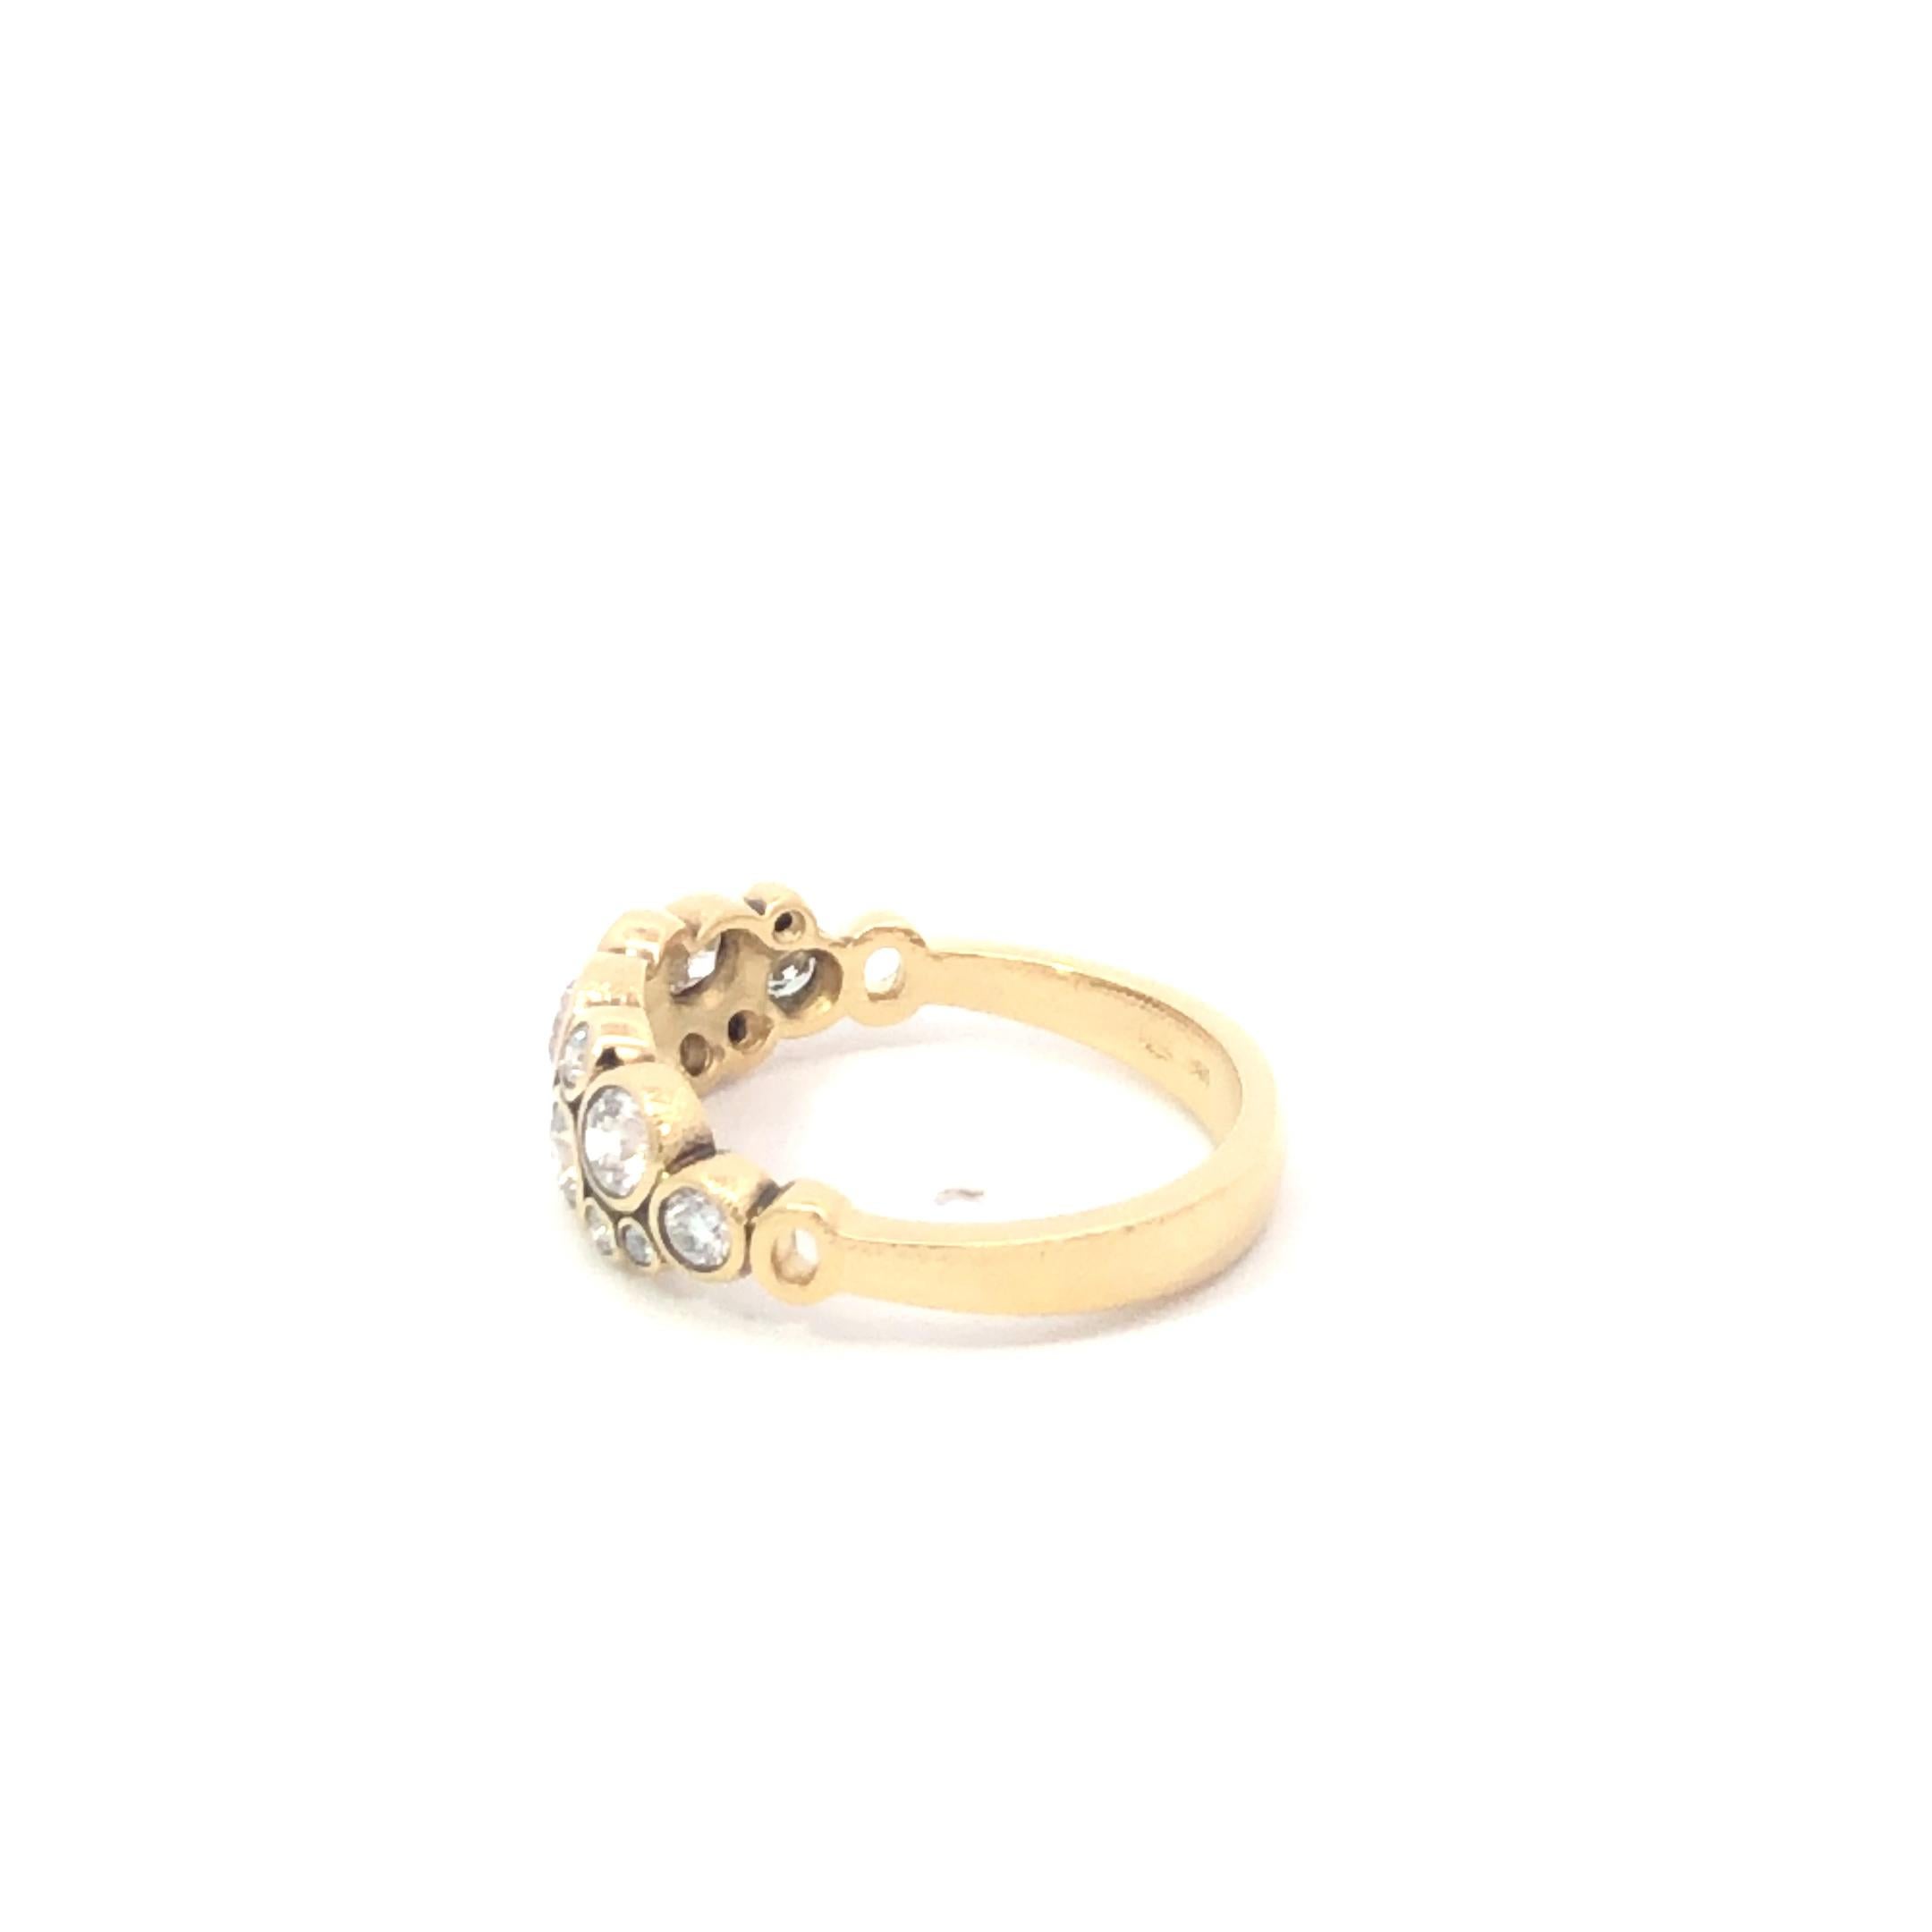 18K Yellow Gold and Diamond Ring, 15 white diamonds. (0.95ct.),

Size 6.75